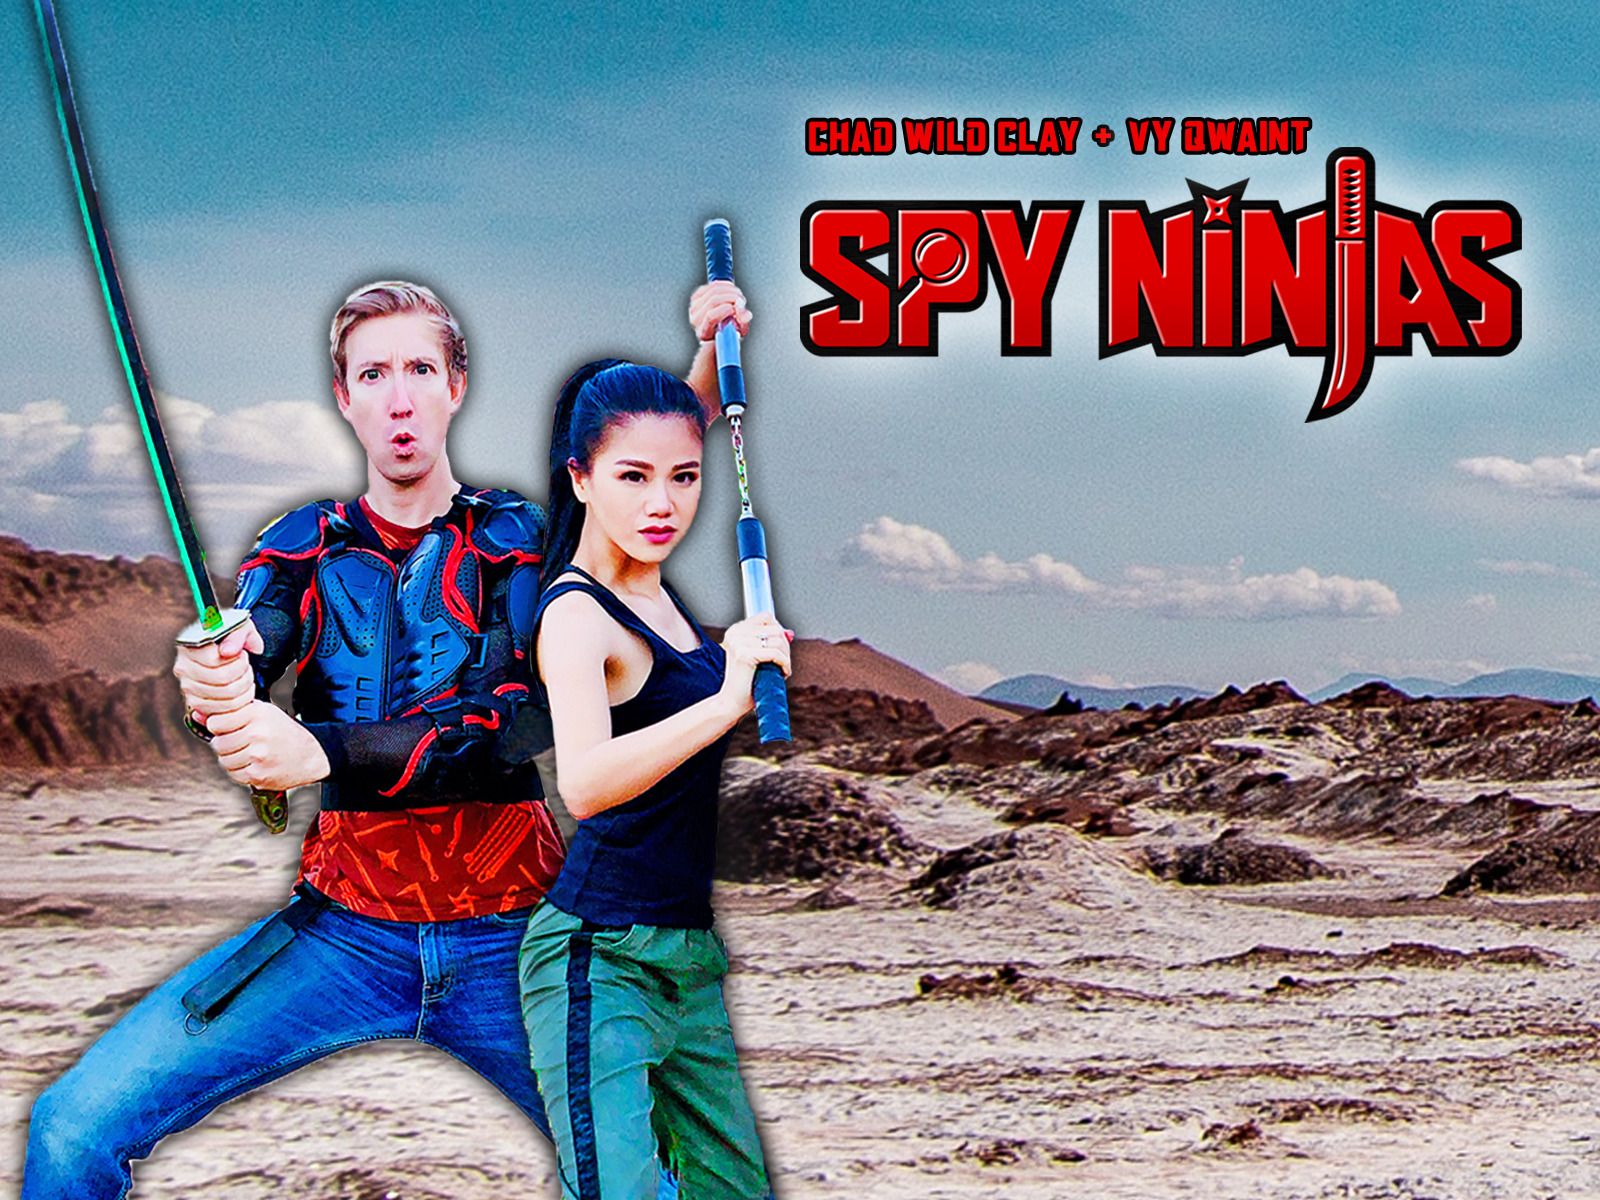 Prime Video: Spy Ninjas Wild Clay & Vy Qwaint